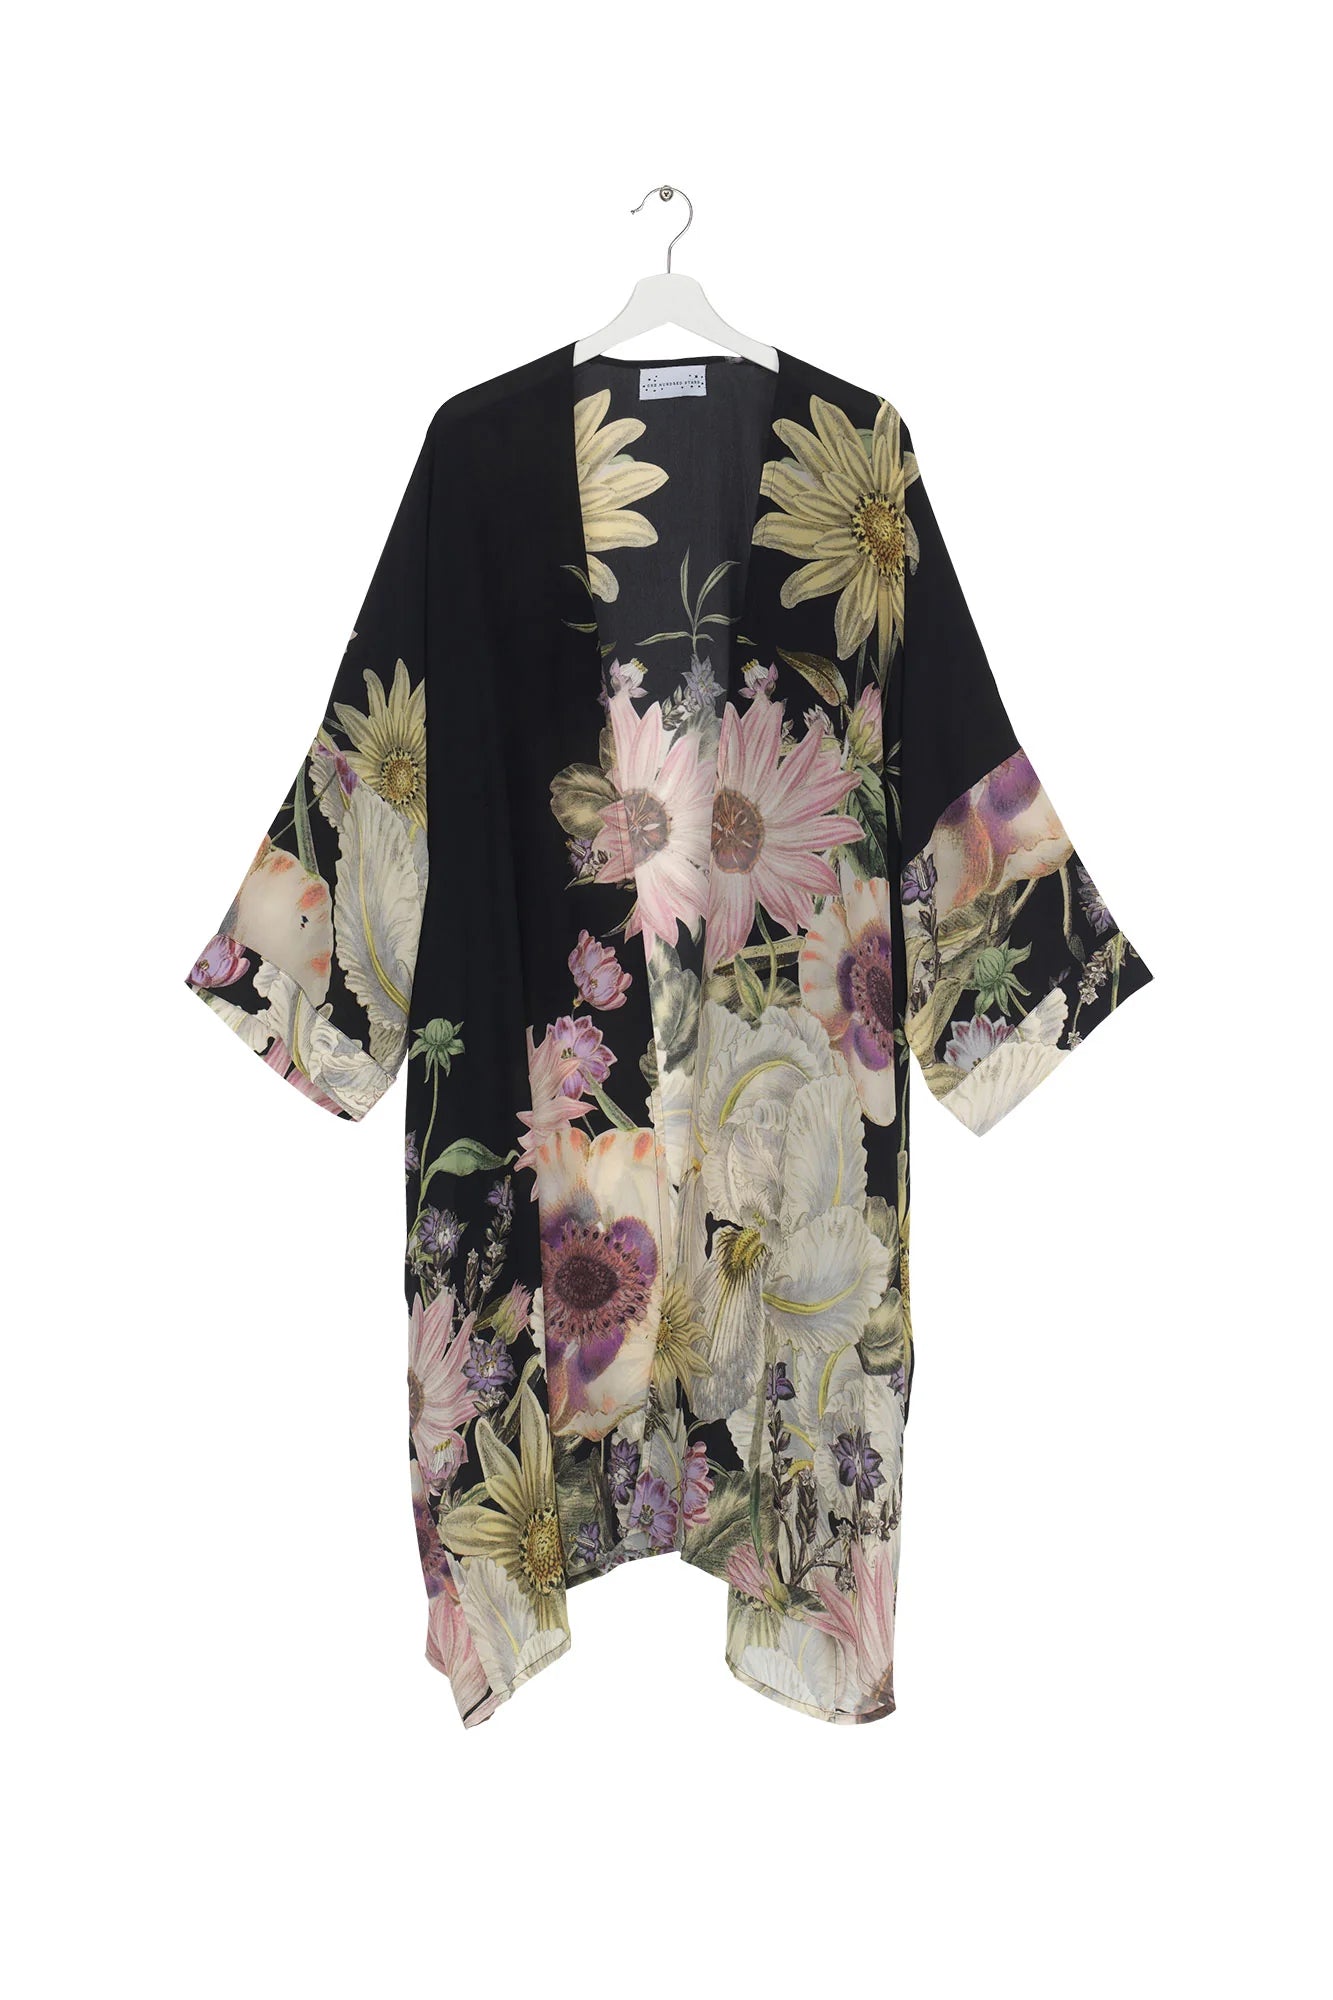 Grande Kimono Daisy Black - The Nancy Smillie Shop - Art, Jewellery & Designer Gifts Glasgow